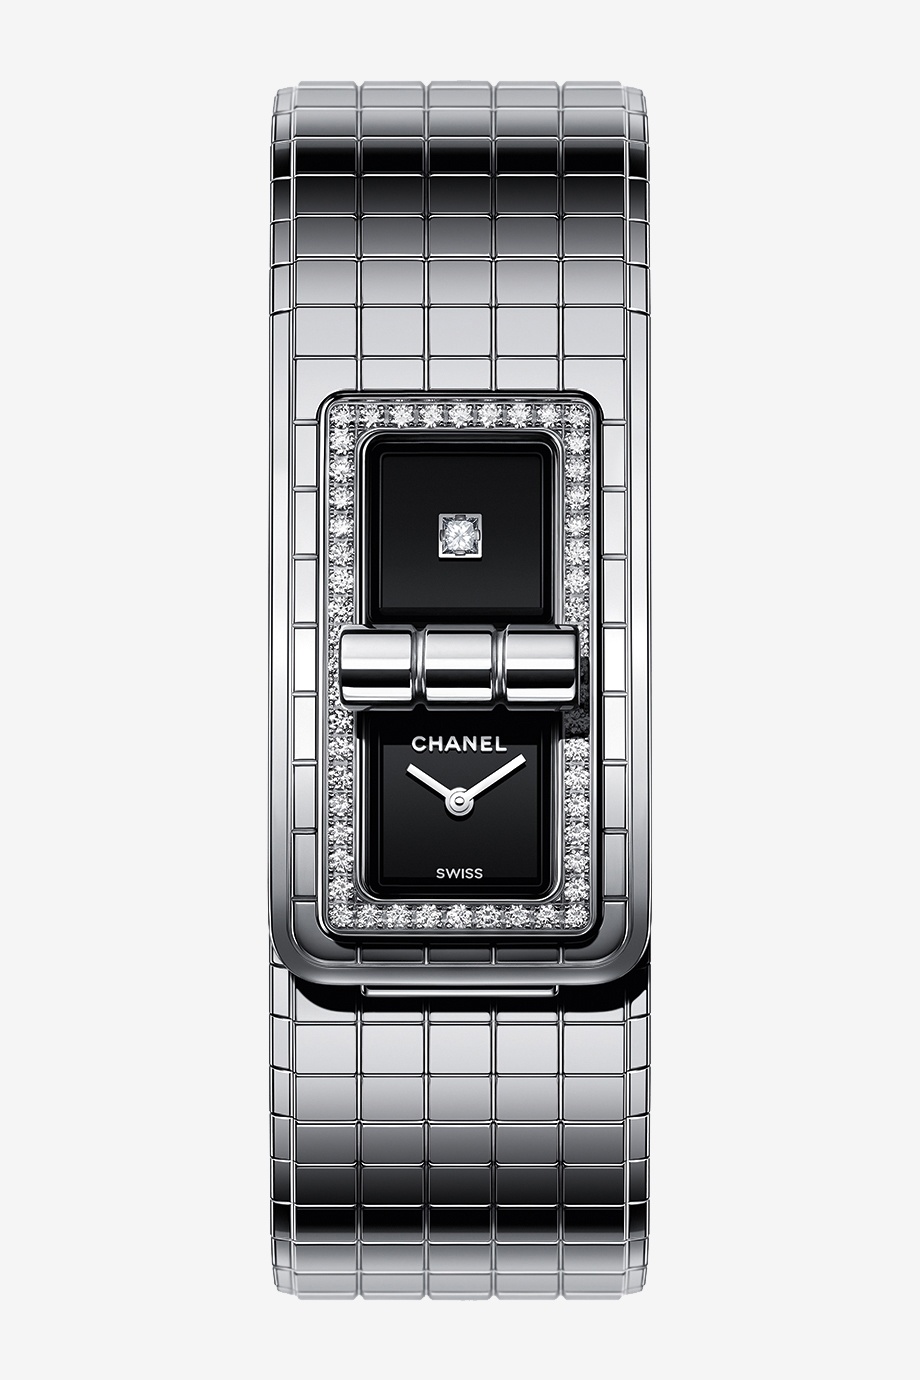 Купить часы Chanel  все цены на Chrono24